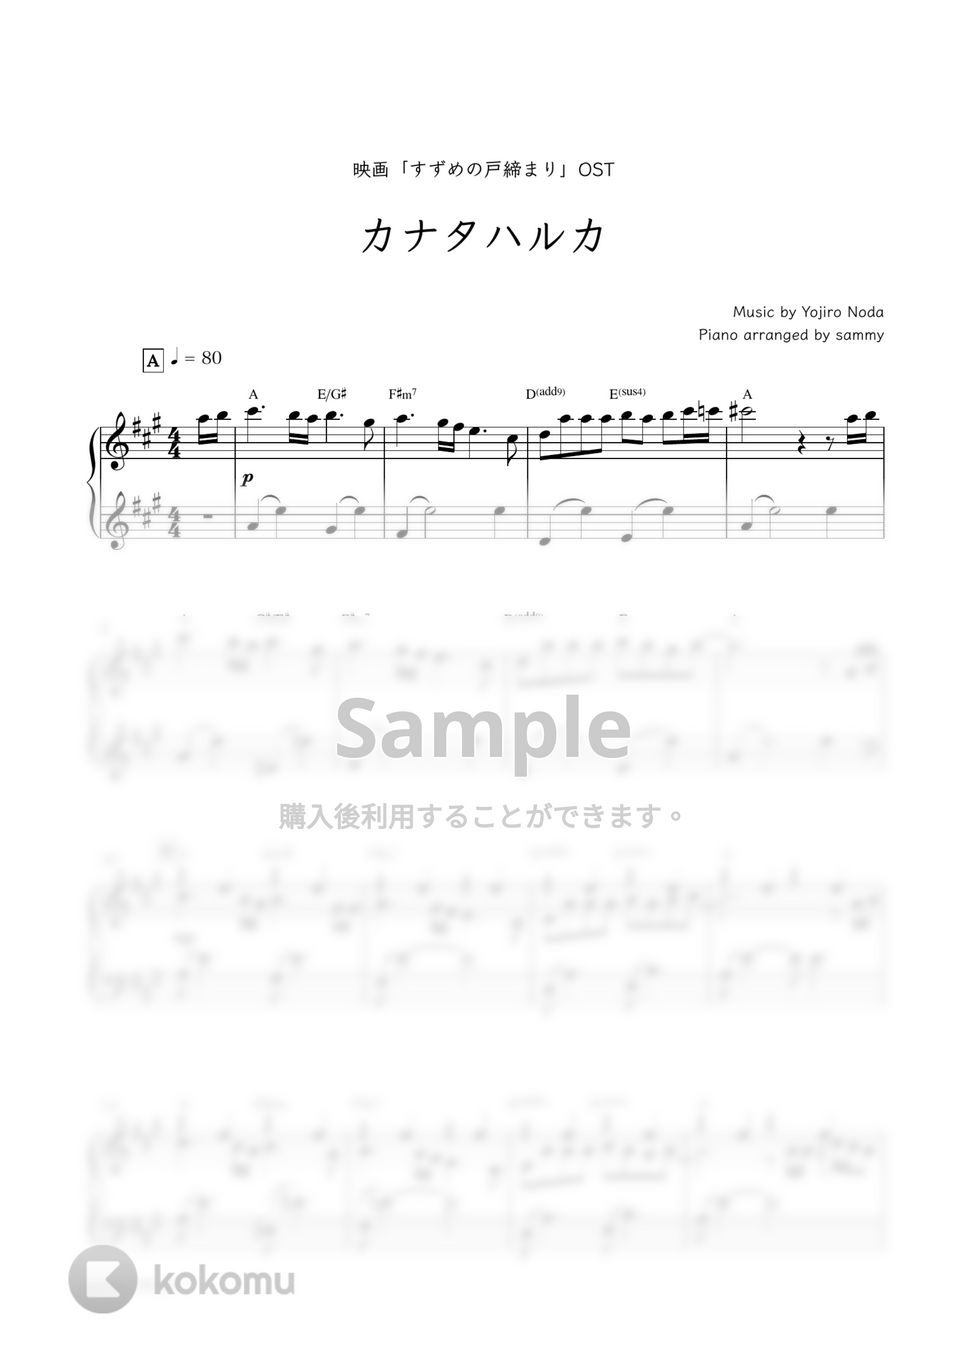 RADWIMPS・映画『すずめの戸締まり』OST - カナタハルカ by sammy